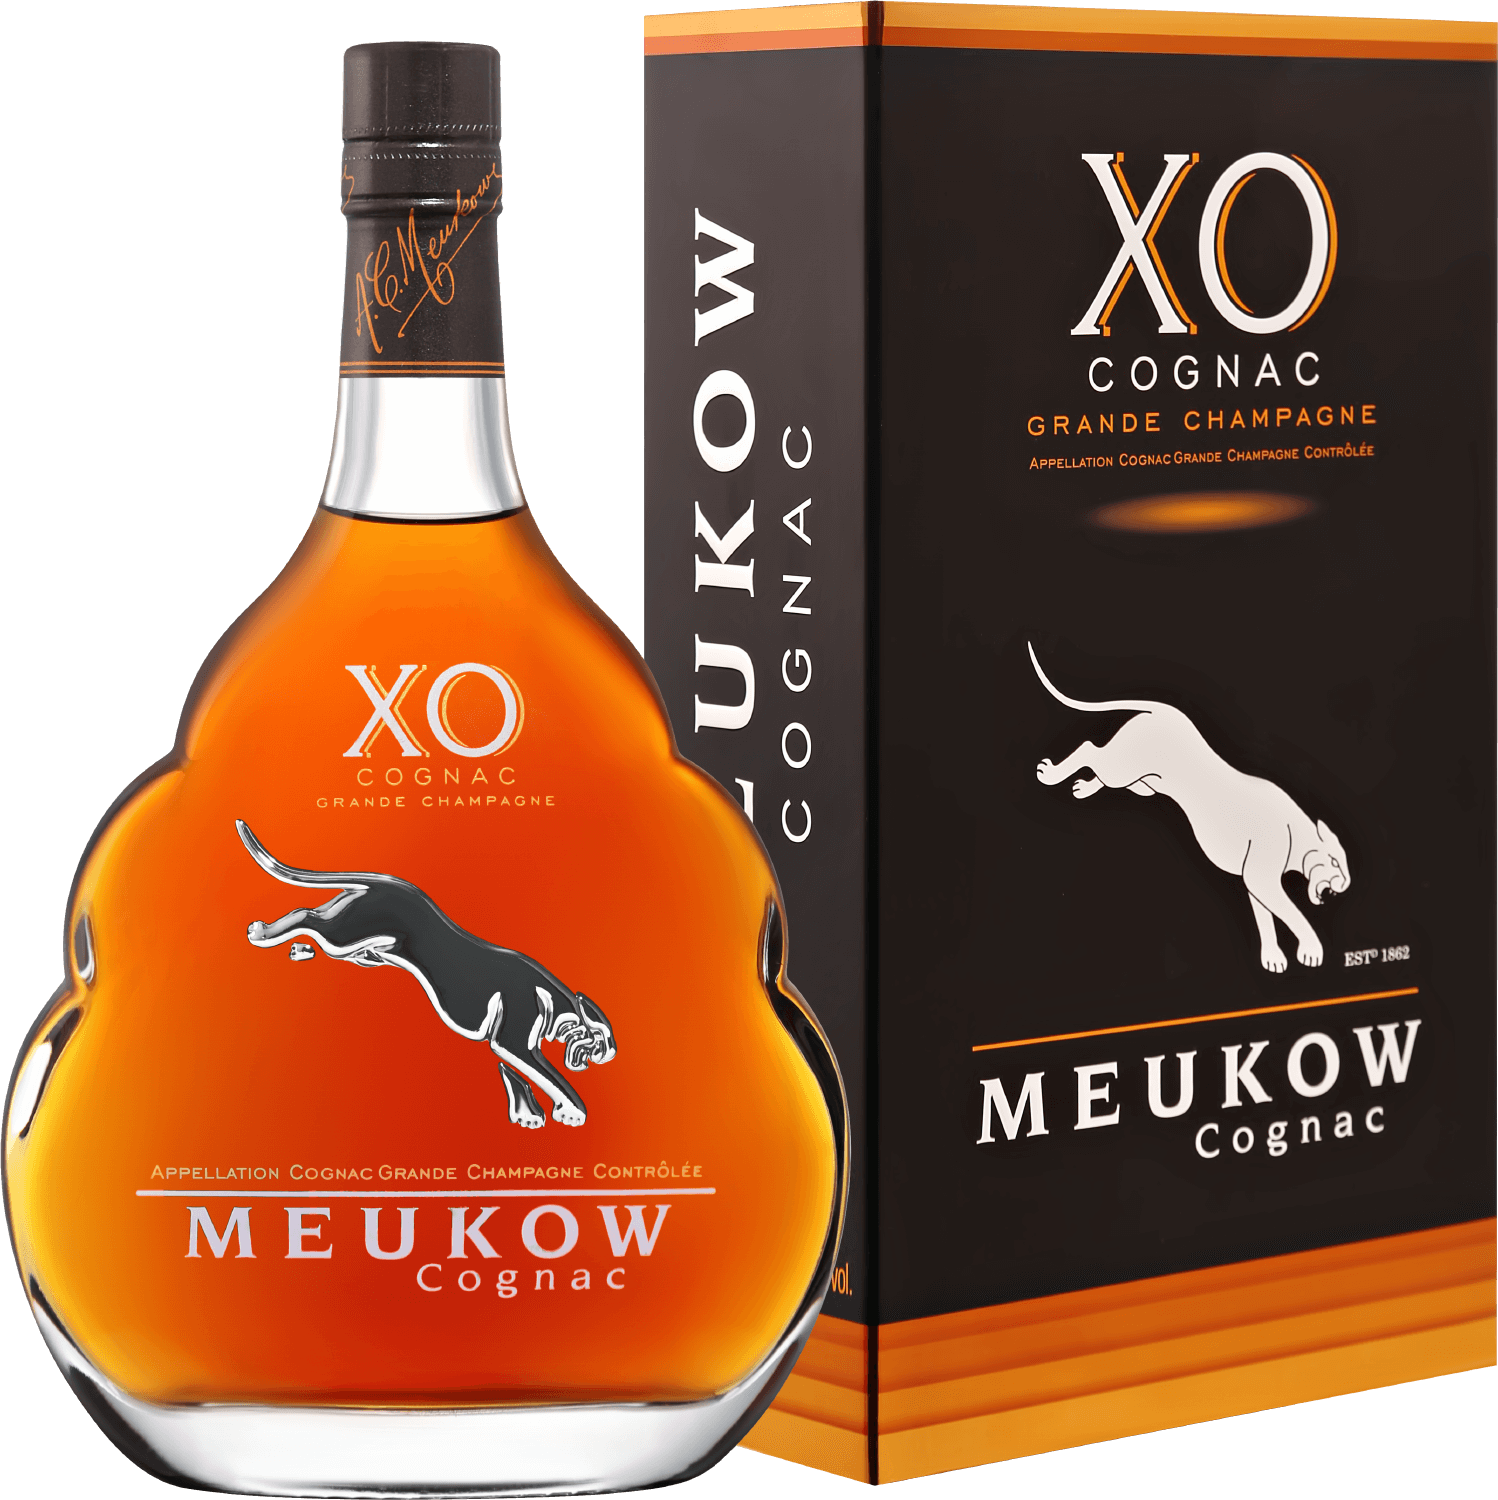 Meukow Cognac XO Grande Champagne (gift box) 44799